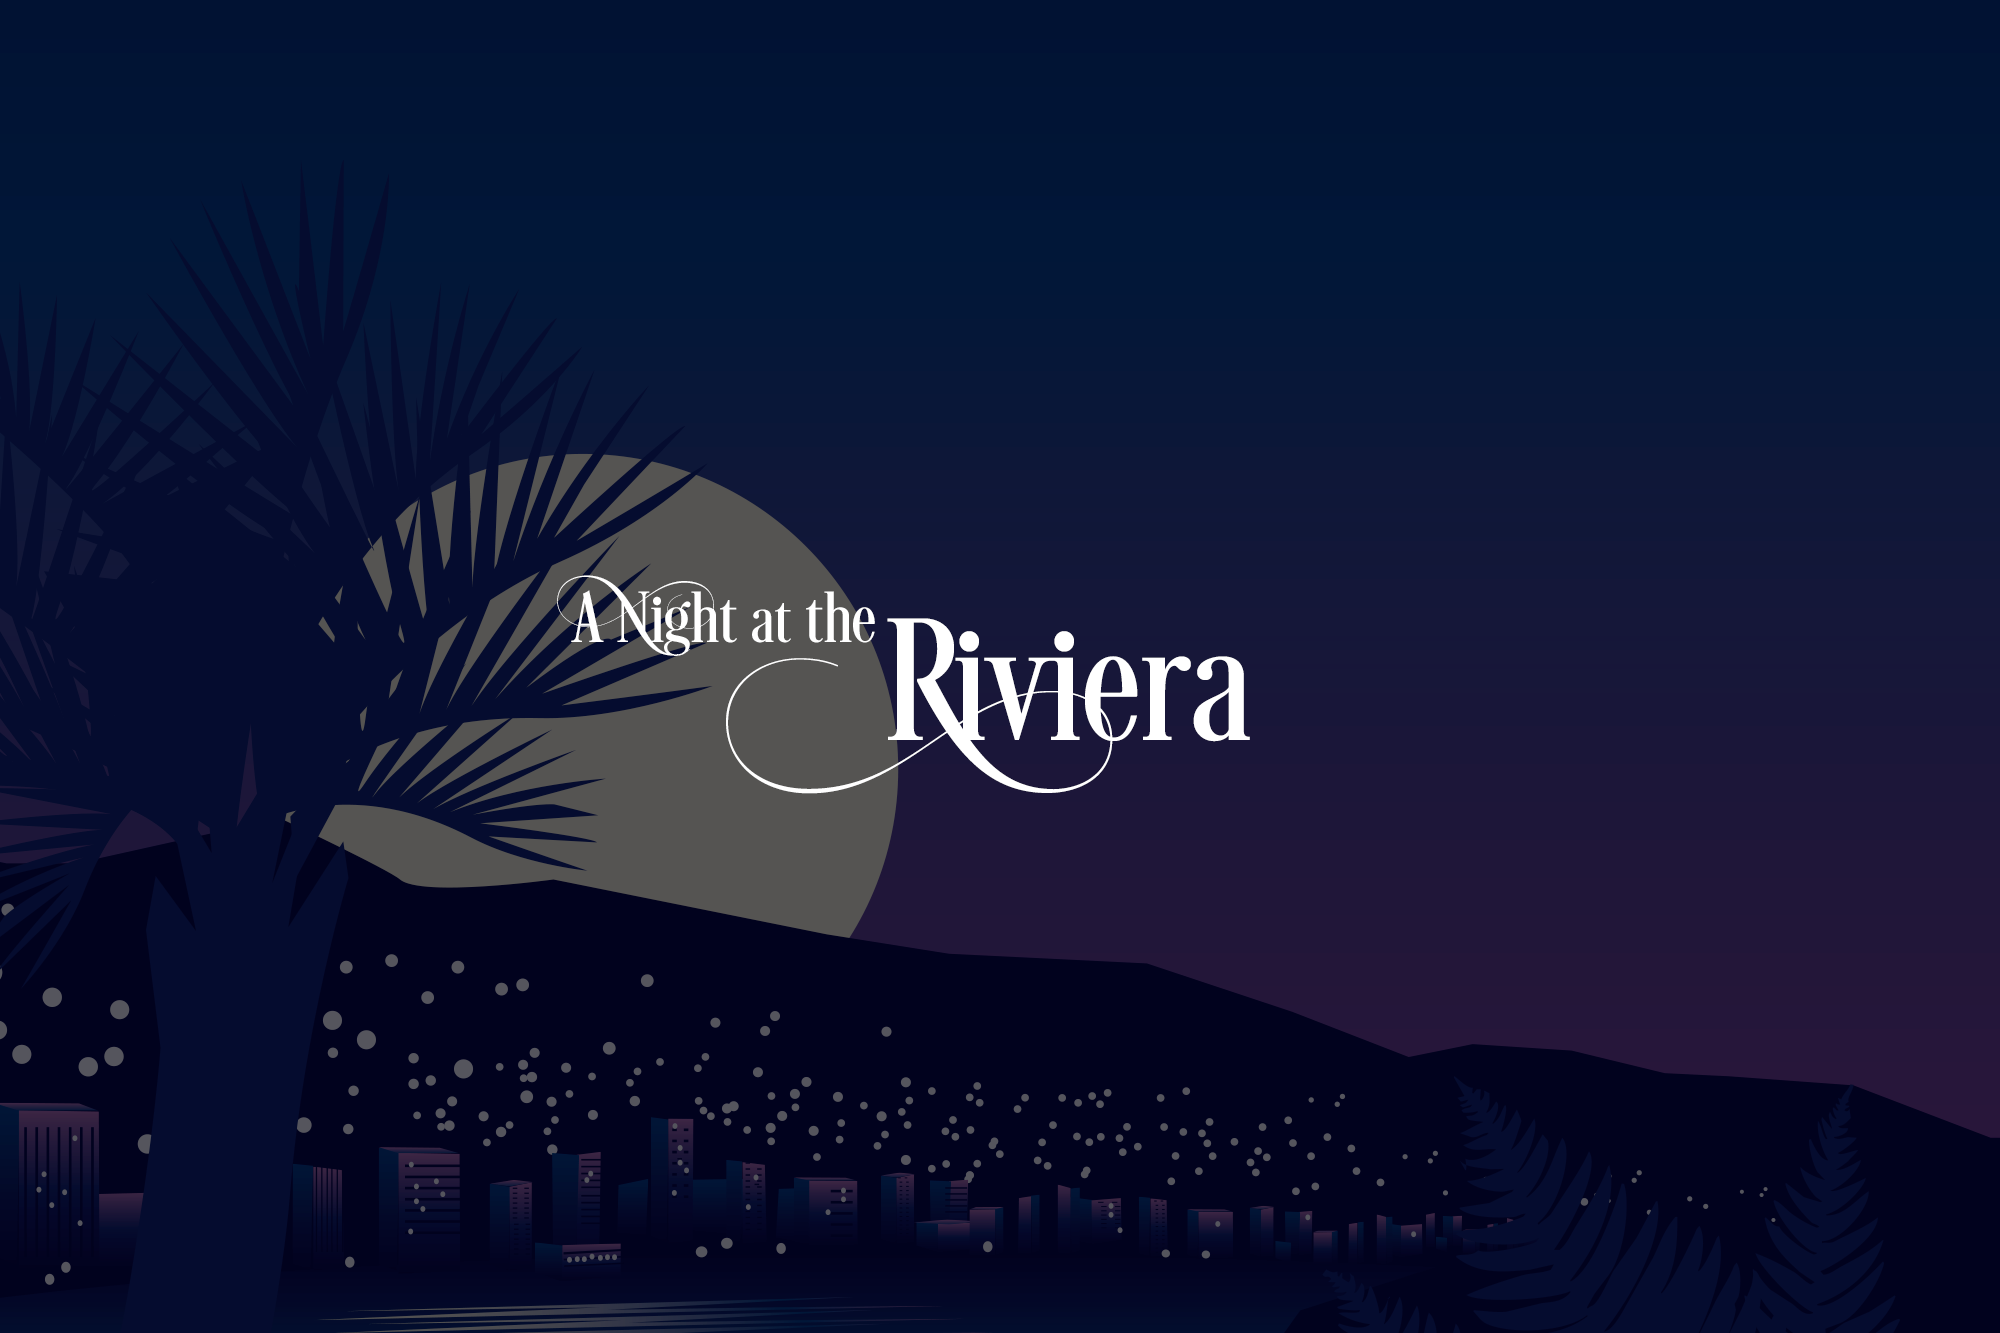 A Night at the Riviera